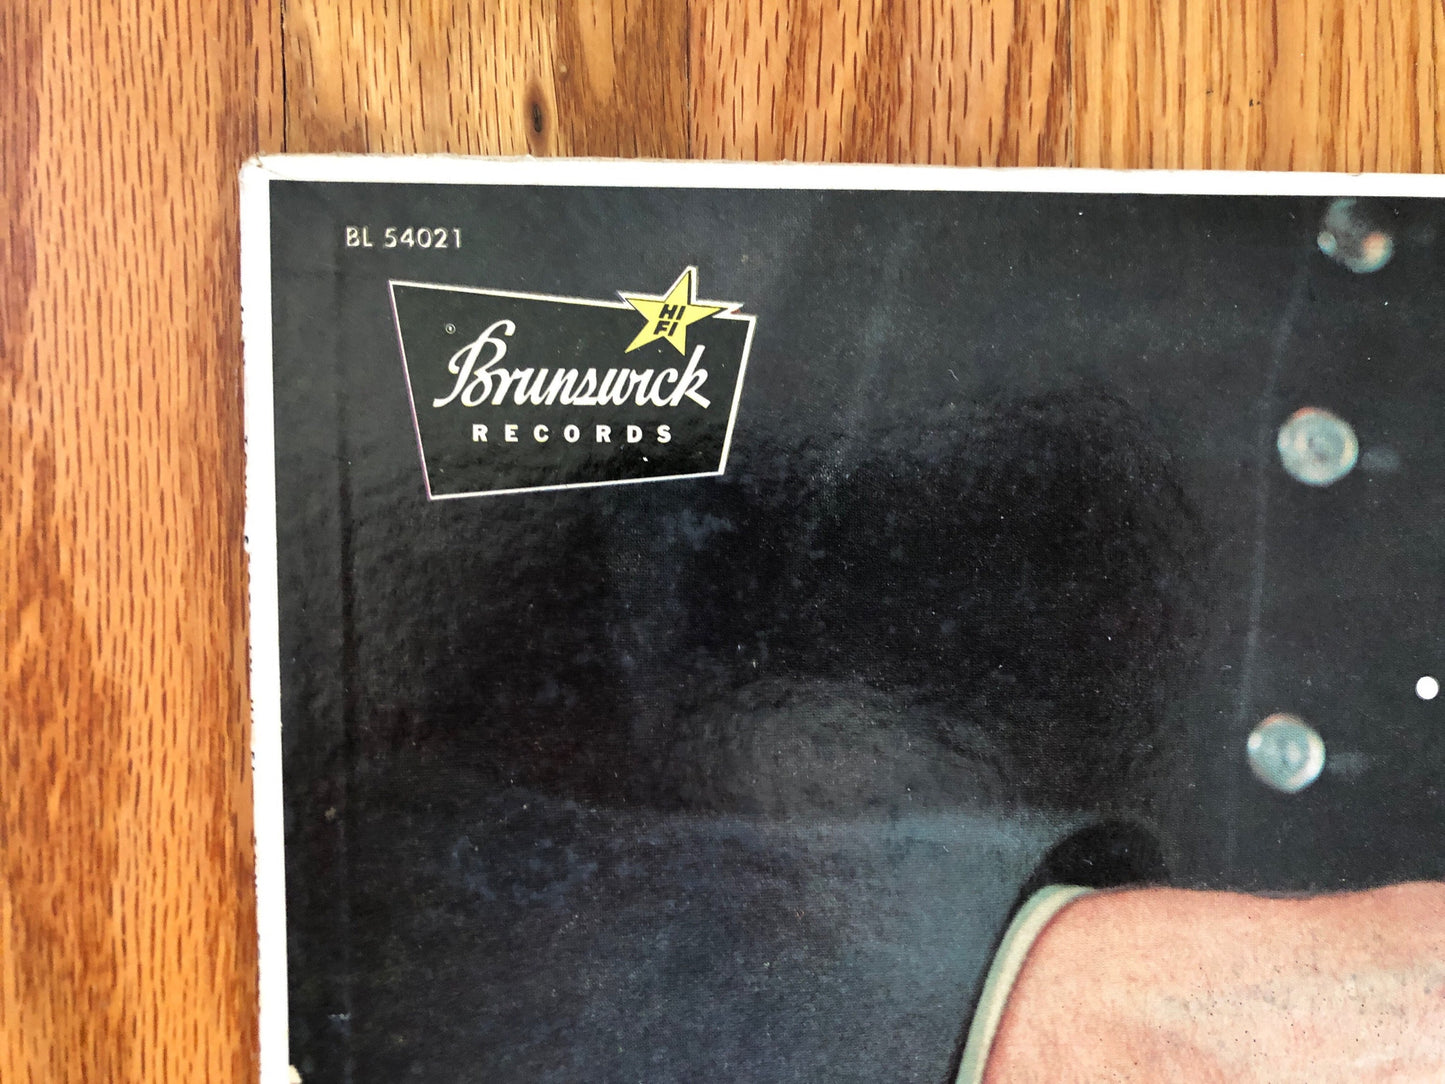 The Tony Scott Quartet Tony Scott In Hi-Fi Brunswick BL 54021 Vinyl LP, Album, Promo, Mono 1955 Jazz, Vintage Jazz Records, Soul Records